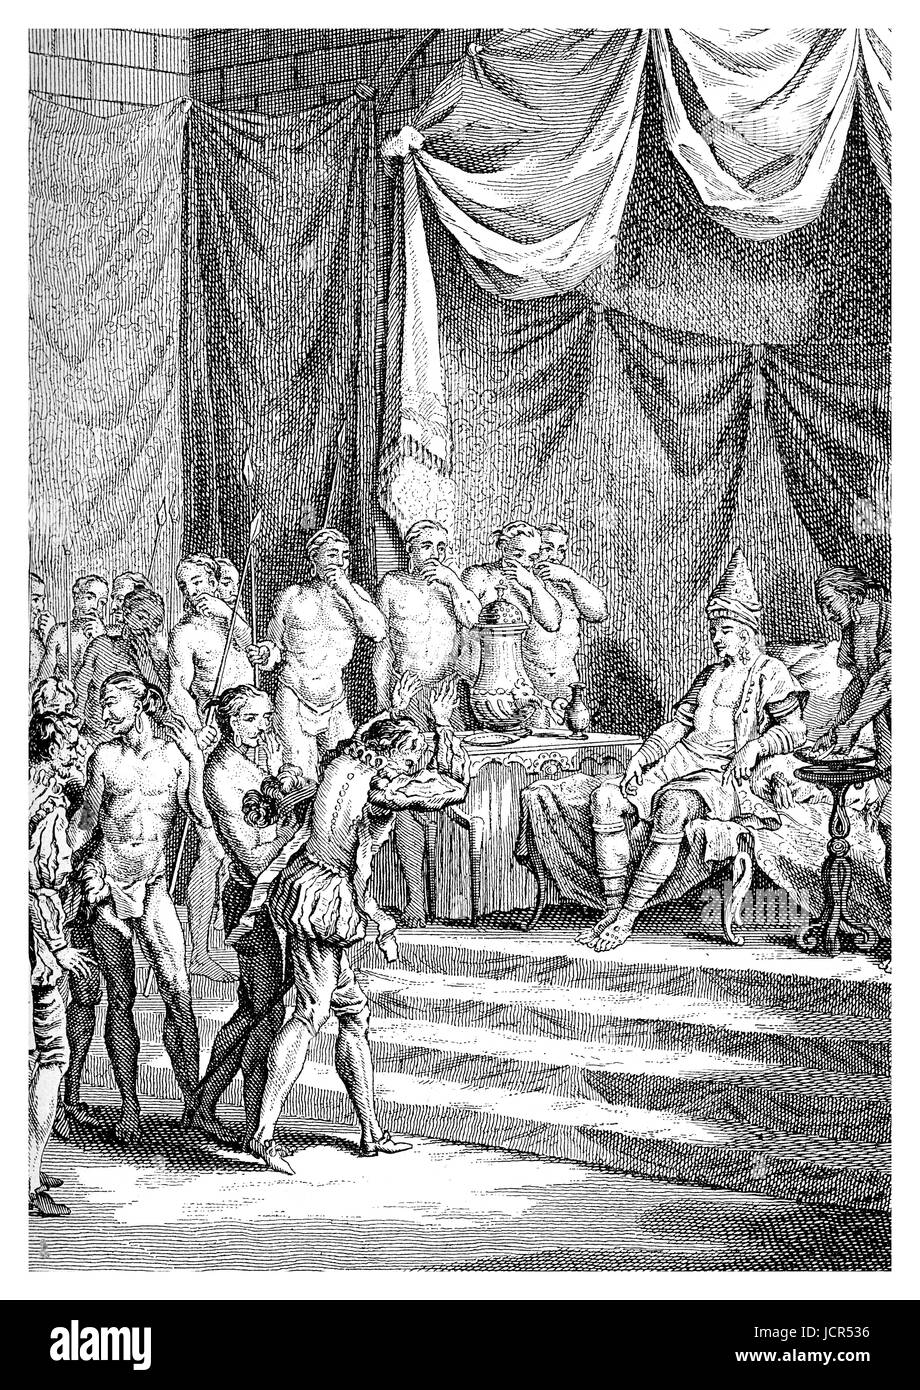 Vasco de Gama udienza concessa dal Zamorin re di Calicut Foto Stock